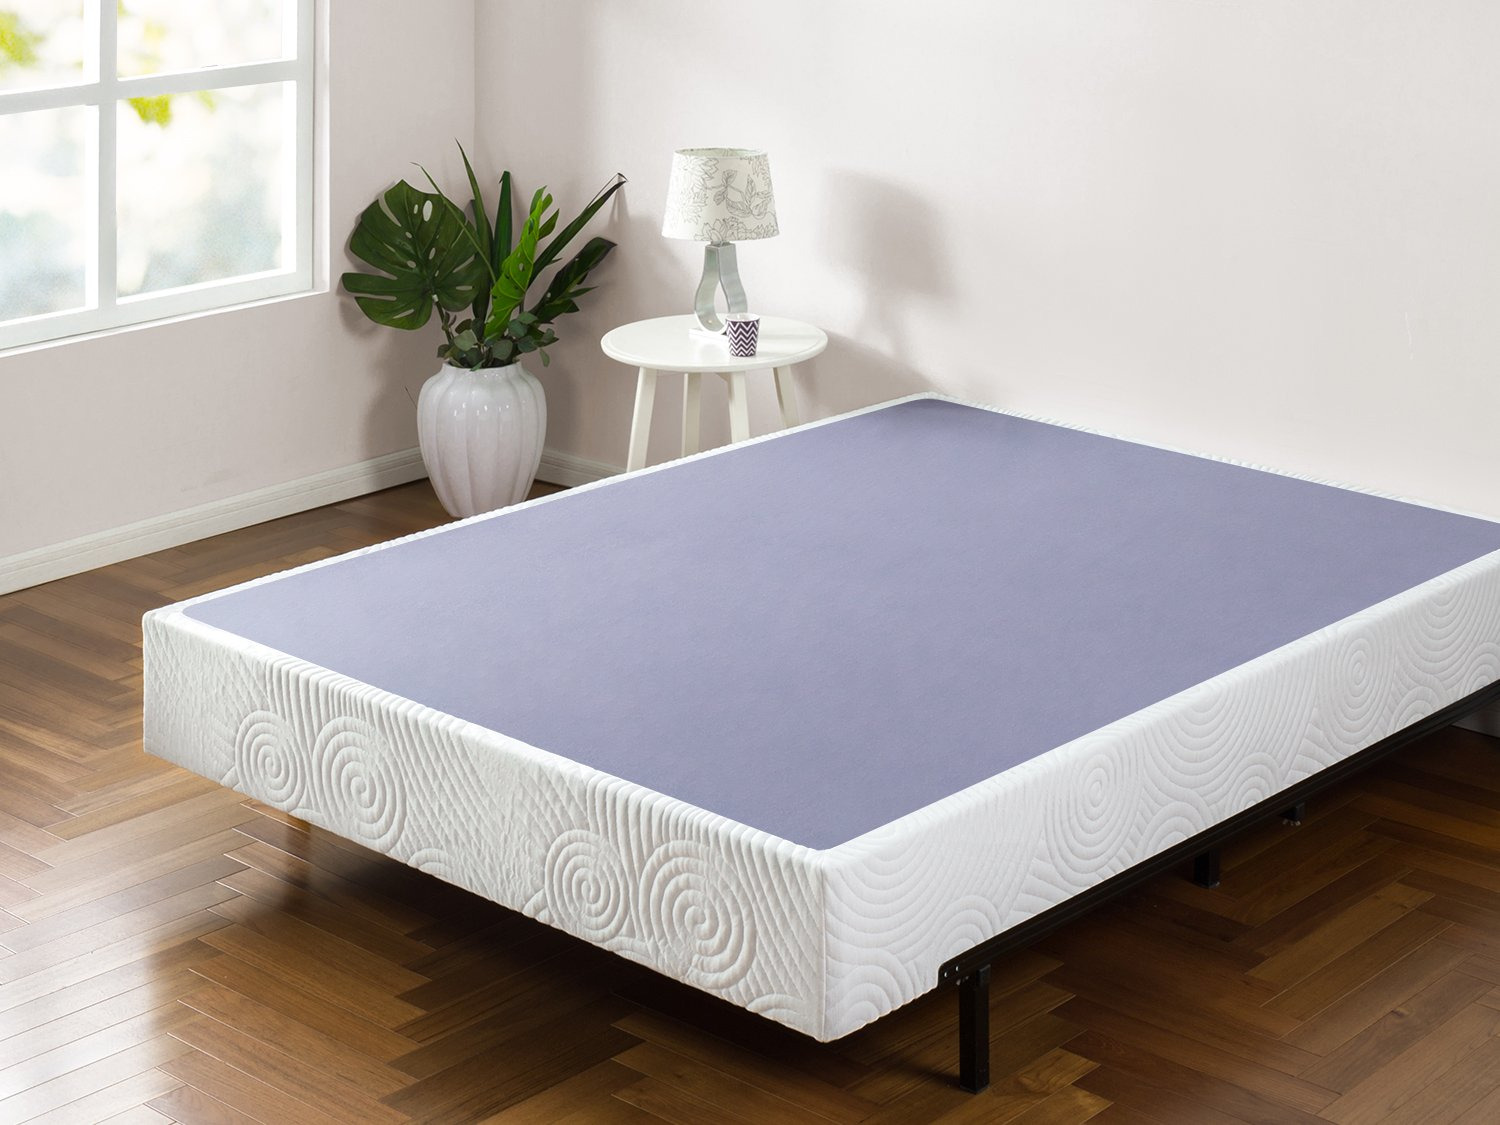 sam's full size mattress and box spring